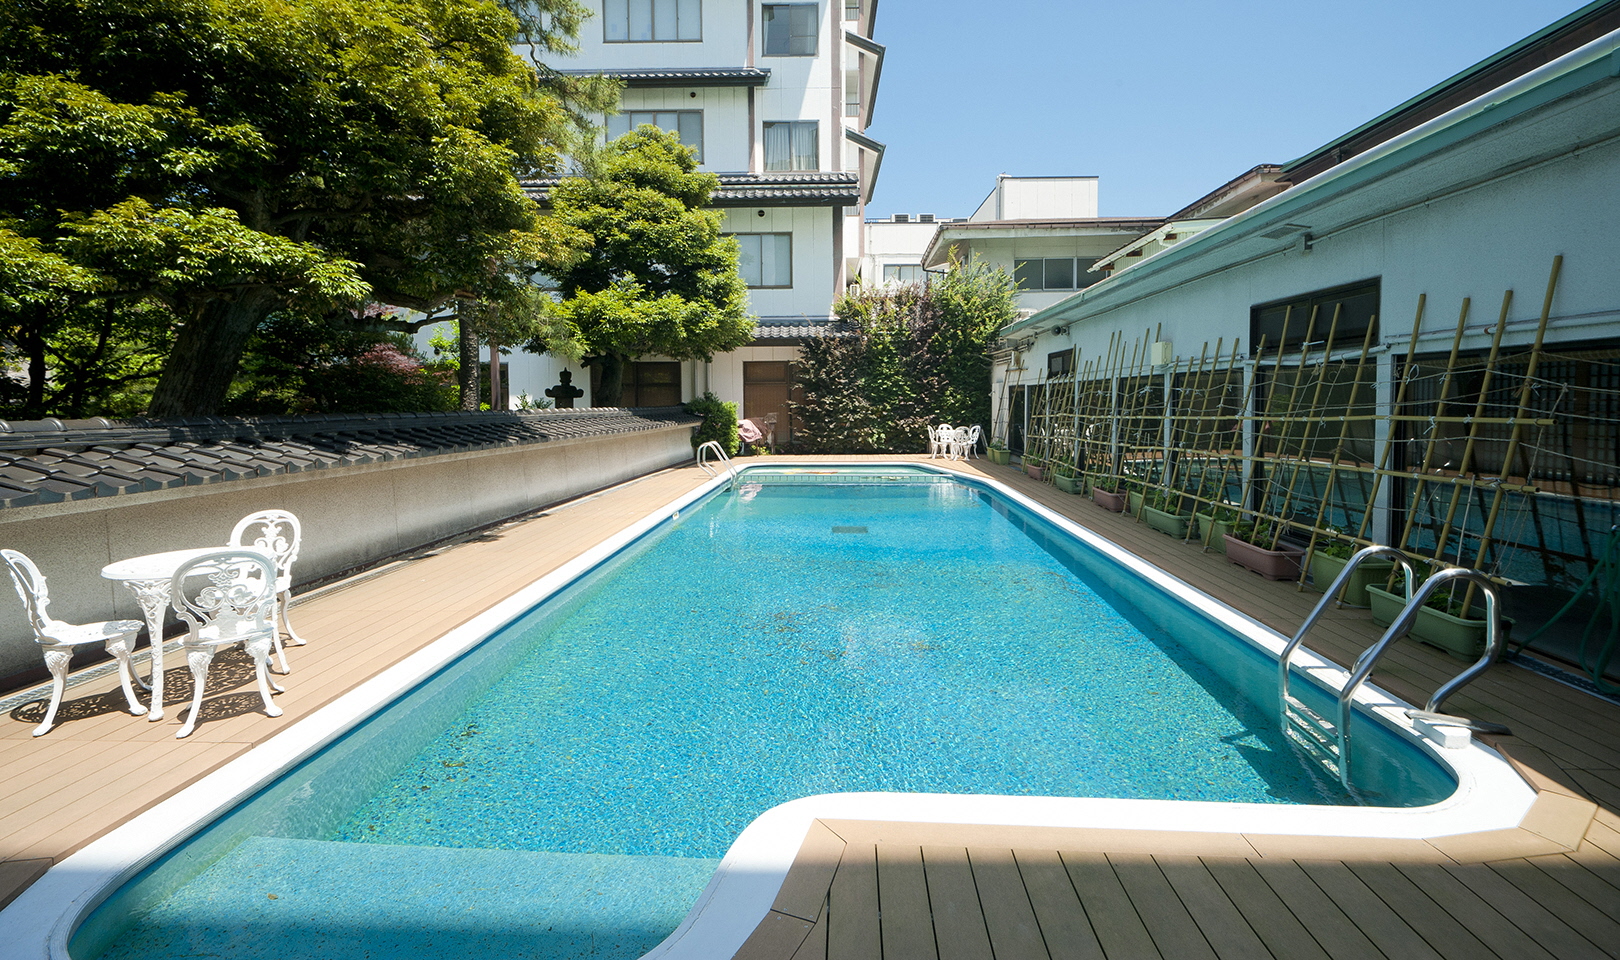 Garden pool (summer only) 